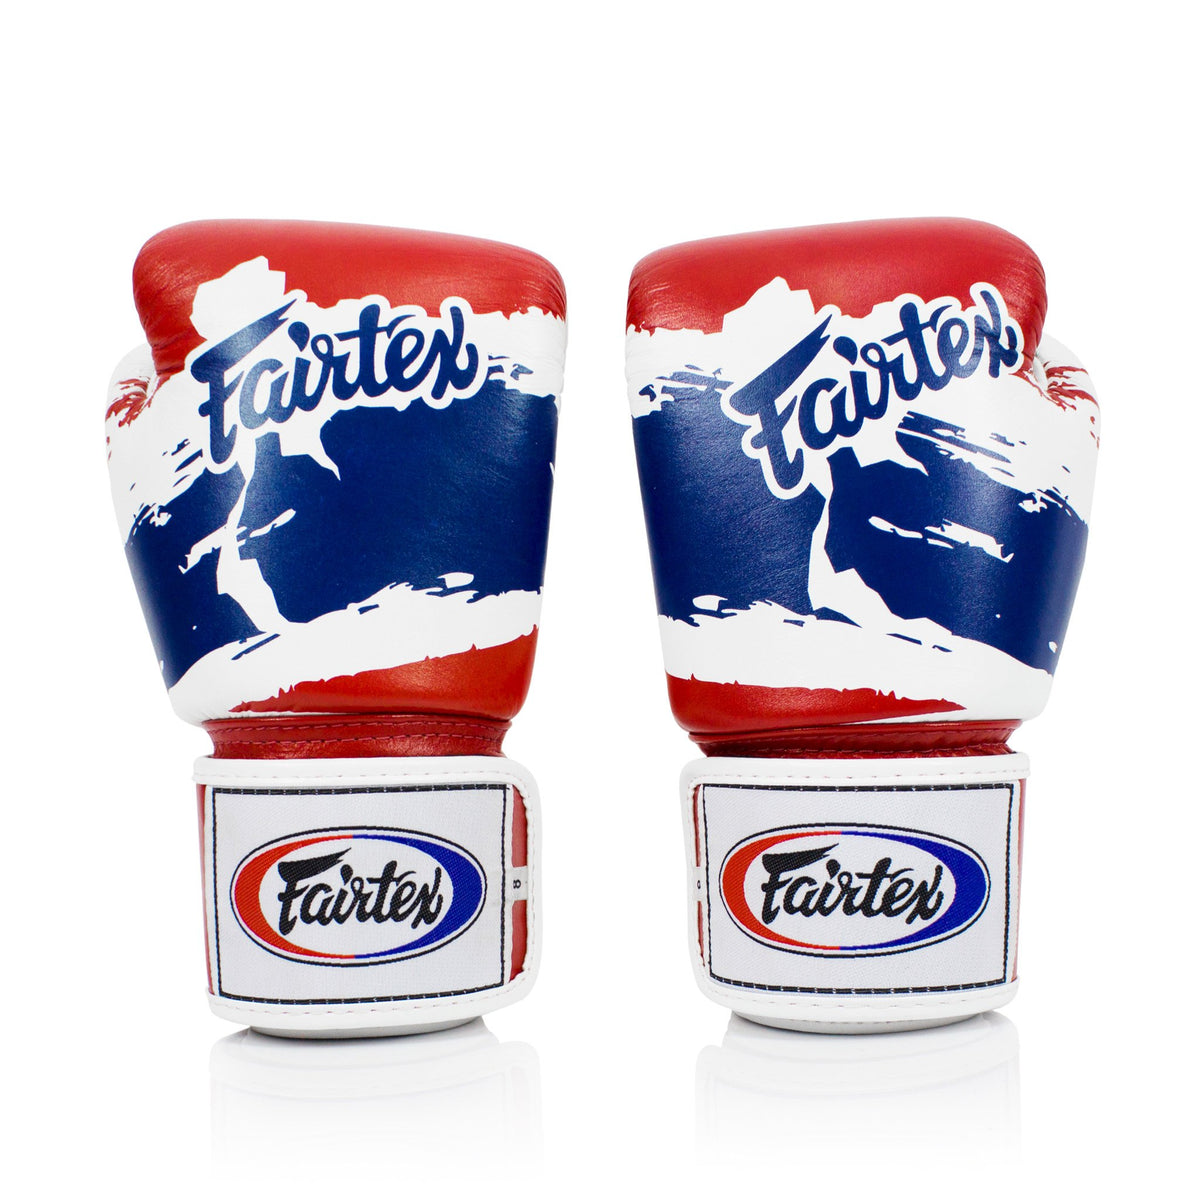 Fairtex- Universal Gloves "Tight-Fit" Design-Thai Pride